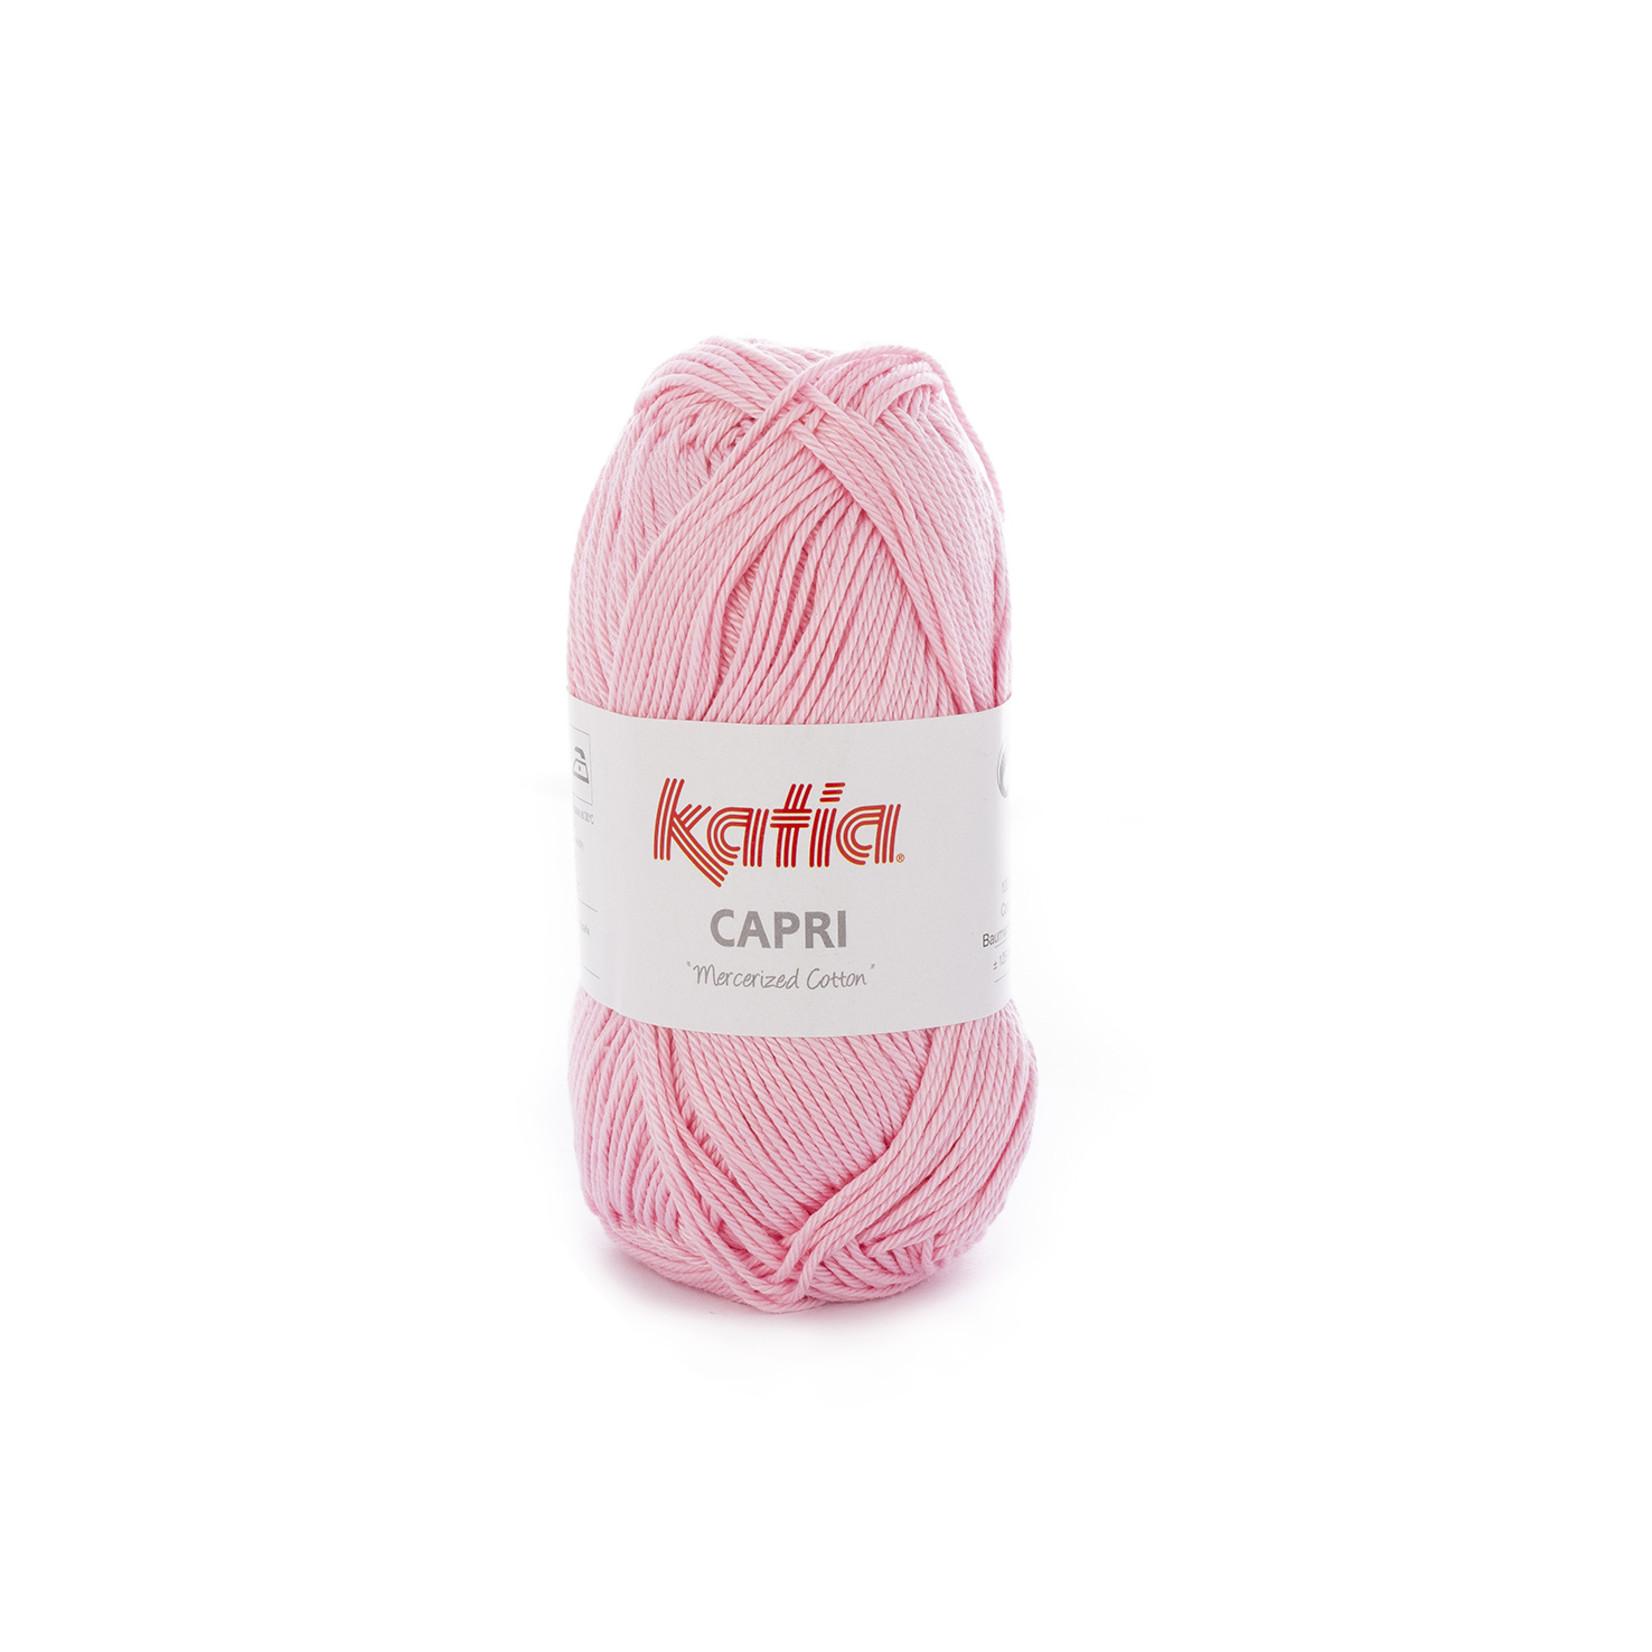 Katia Katia Capri - kleur 121 Medium Bleekrood - 50 gr. = 125 m. - 100% katoen